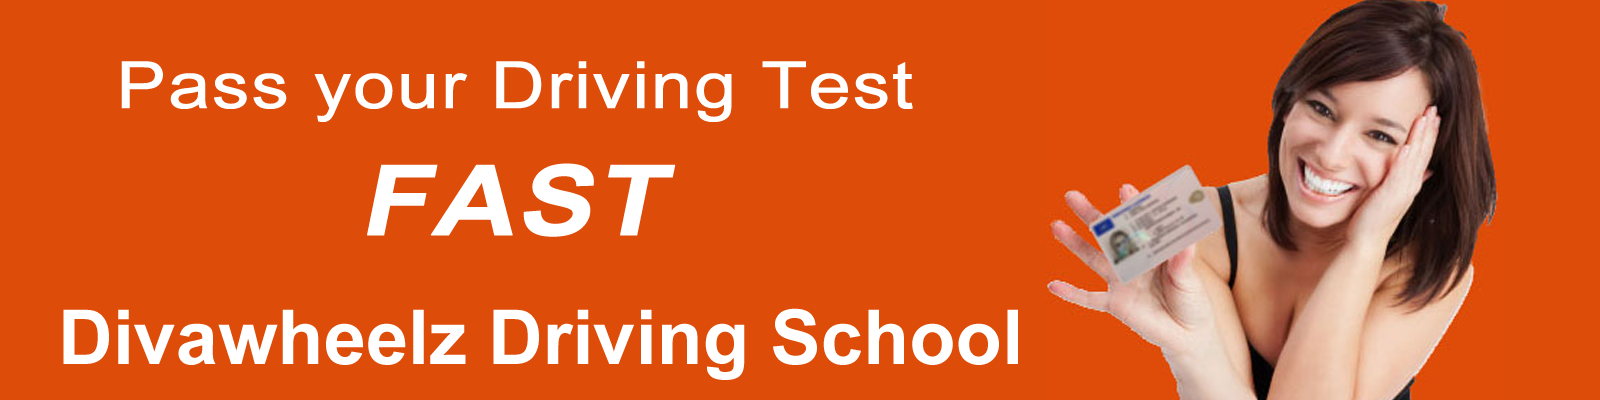 pass-your-driving-test-fast-divawheelz